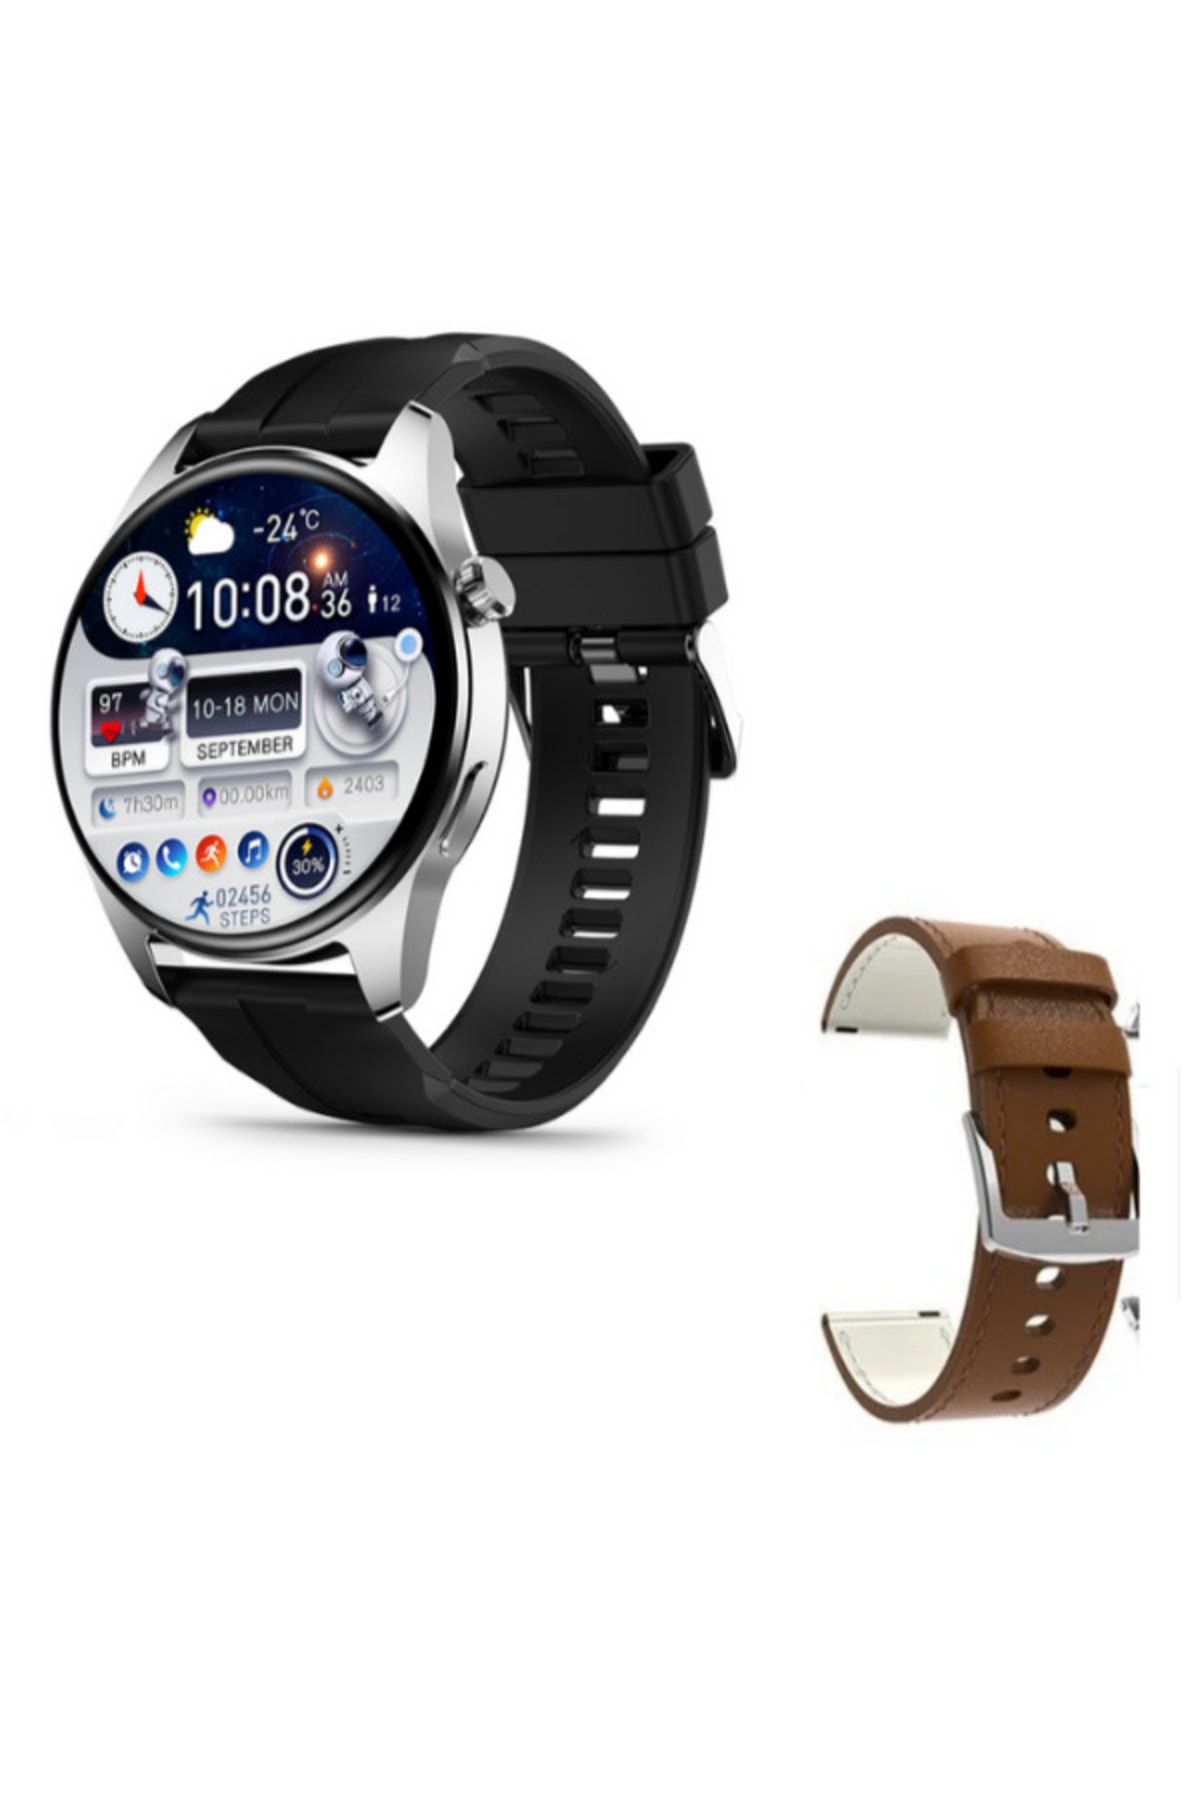 Teknoloji Gelsin Hk 4 Hero Akıllı Saat 1.5 Inç Amoled Ekran Smartwatch Pusula Gt4 Pro Max Çift Kordonlu Gps Nfc Siri